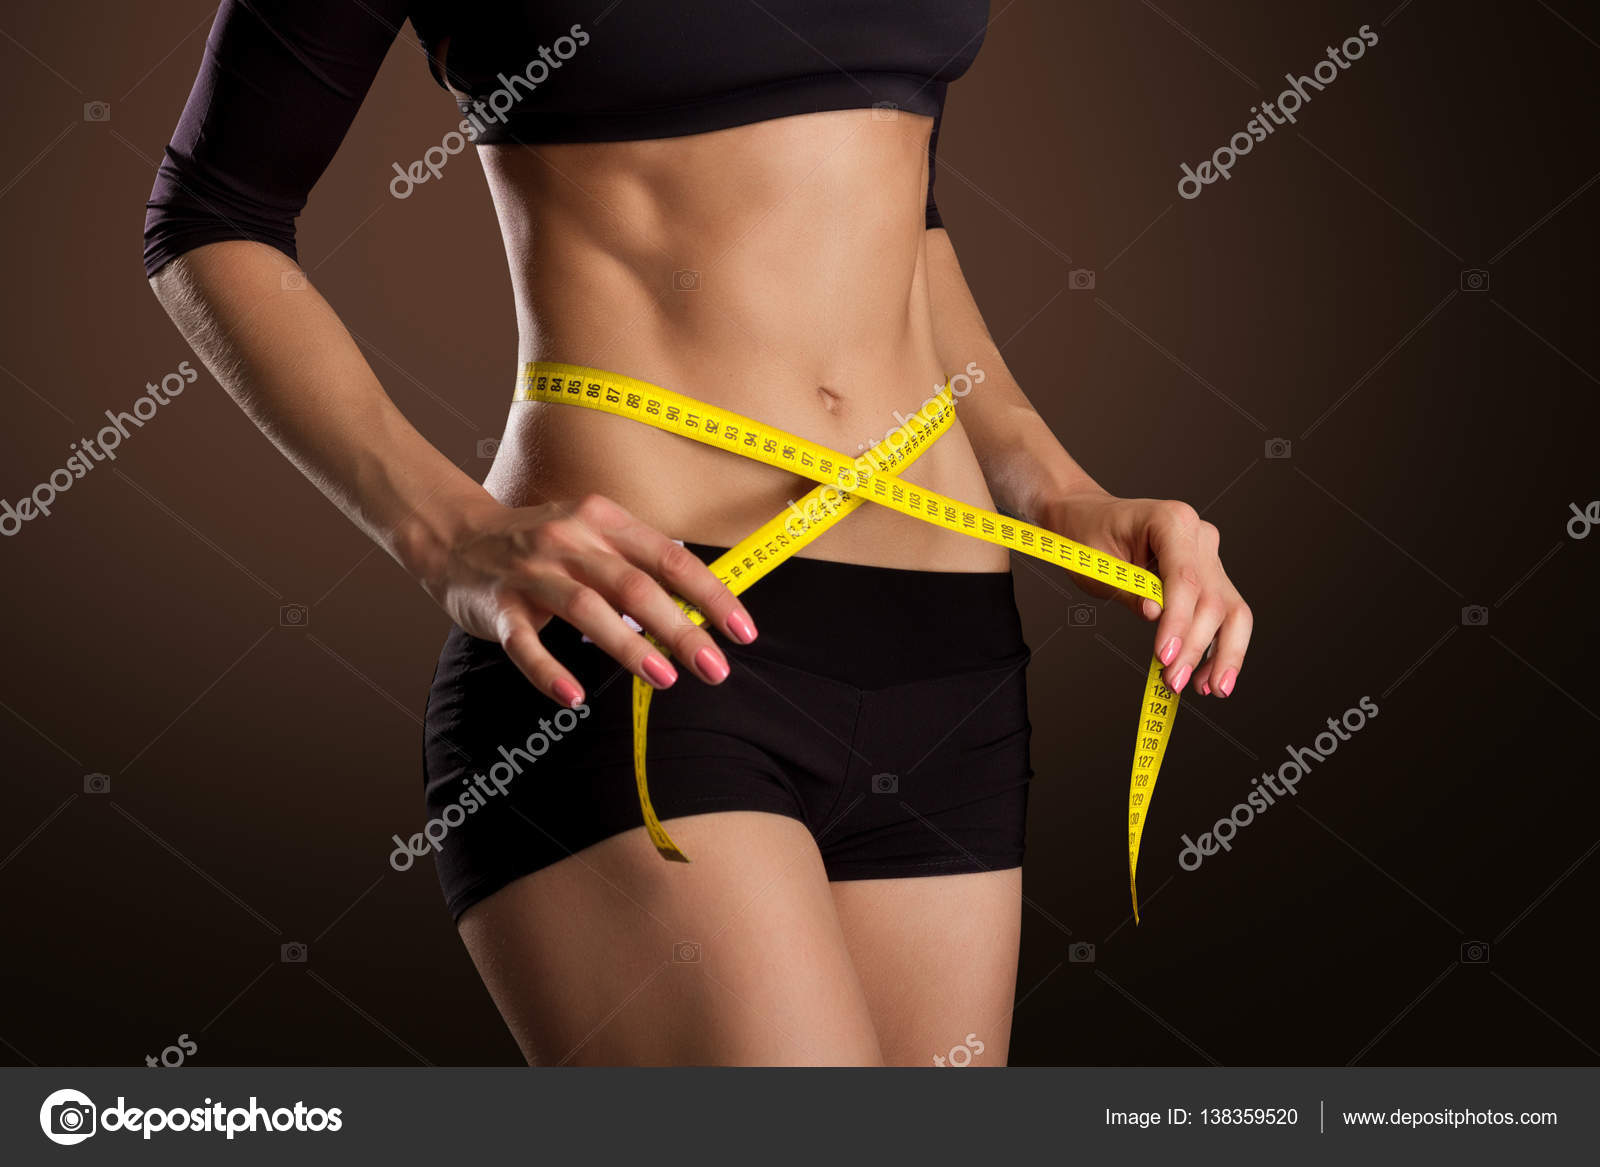 https://st3.depositphotos.com/3070393/13835/i/1600/depositphotos_138359520-stock-photo-healthy-female-body.jpg